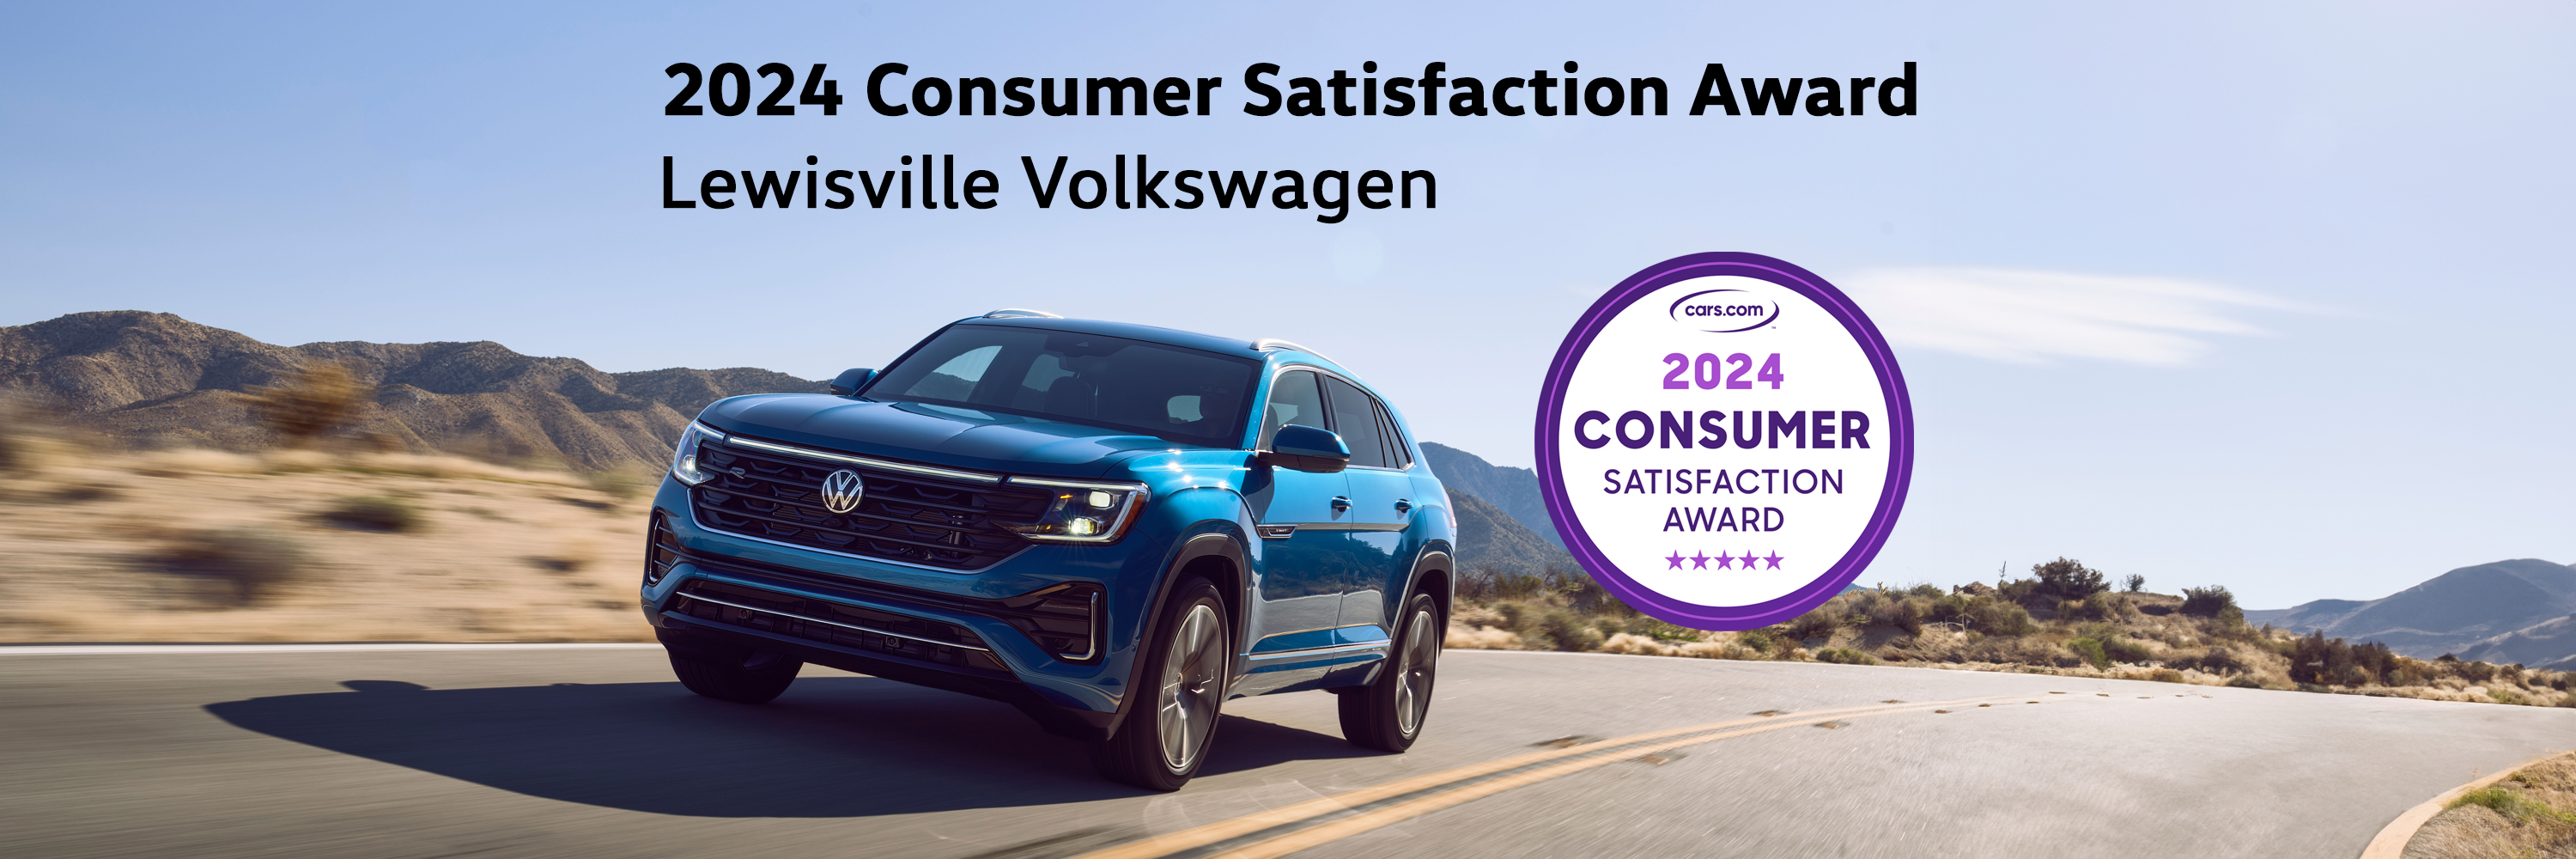 Consumer Satisfaction Award 2024